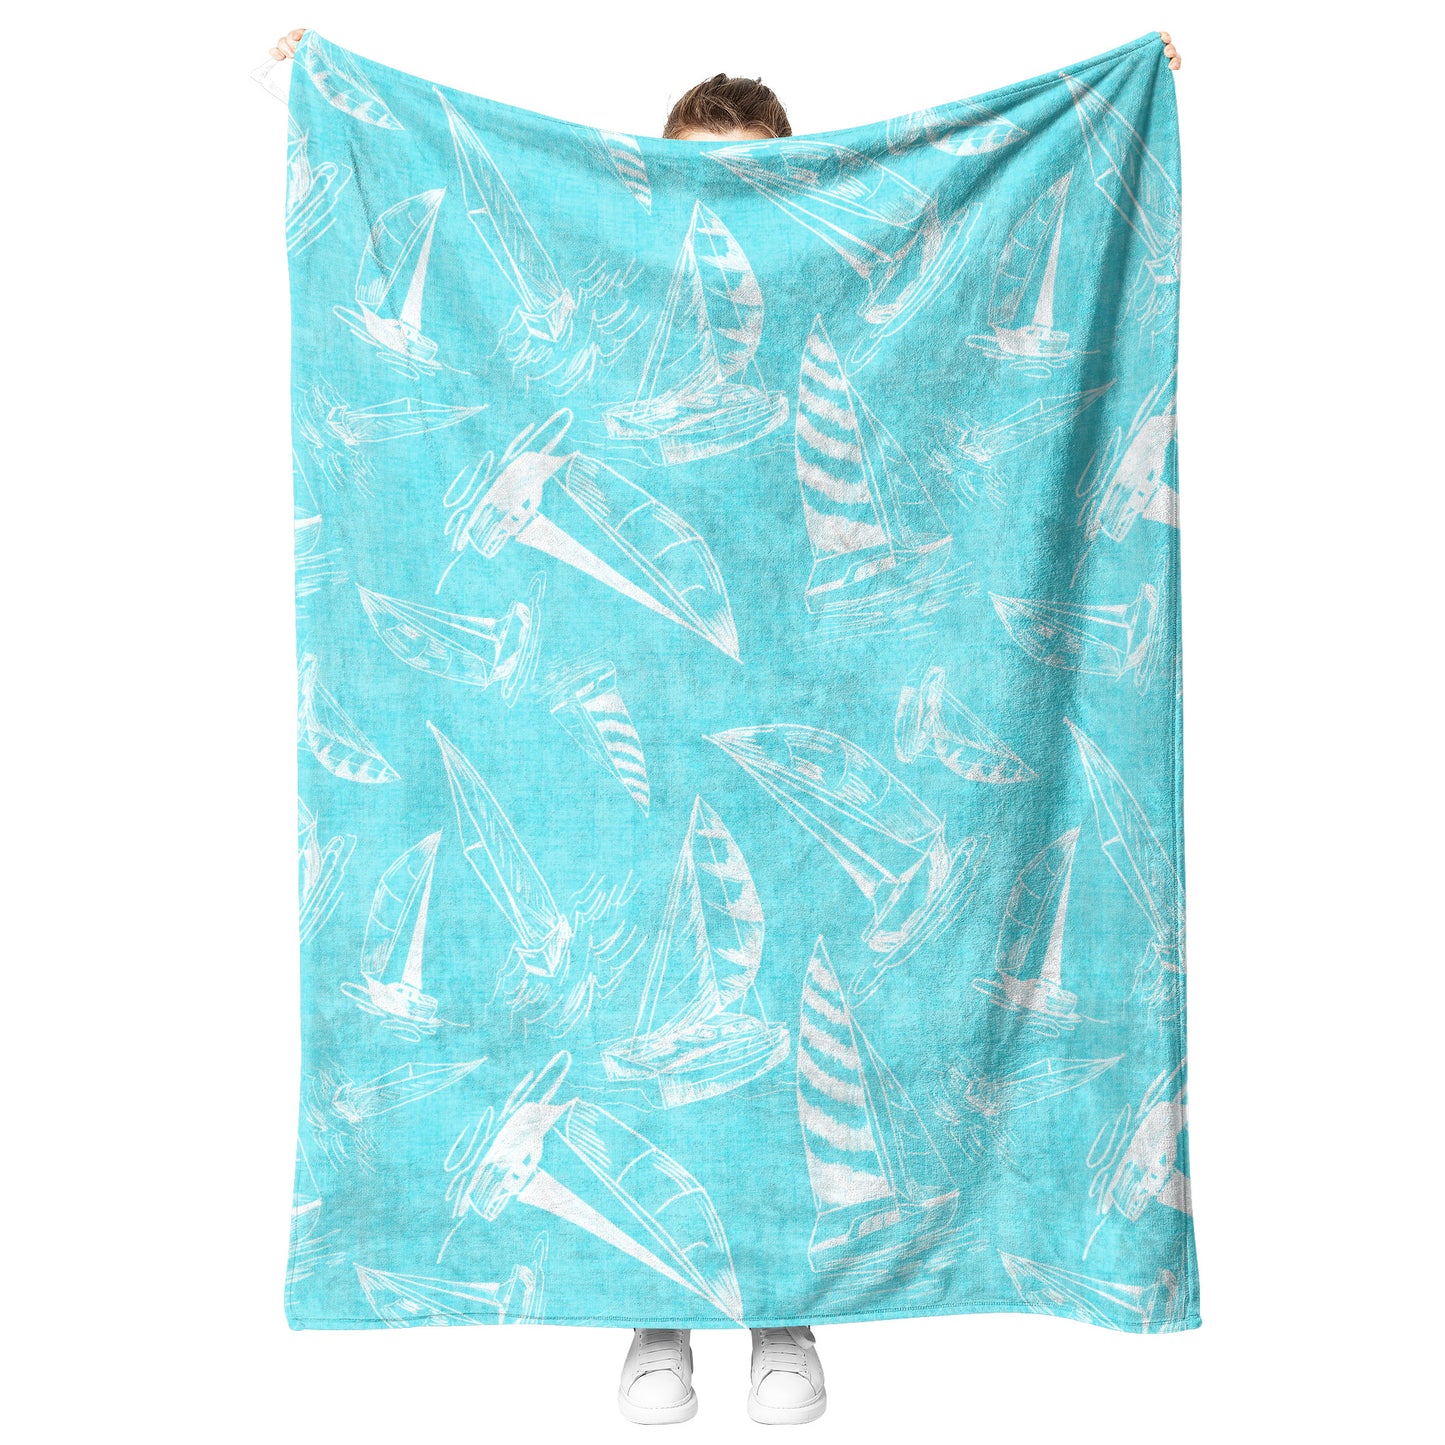 Sailboat Sketches on Tropical Blue Linen Texture Background, Fleece Blanket